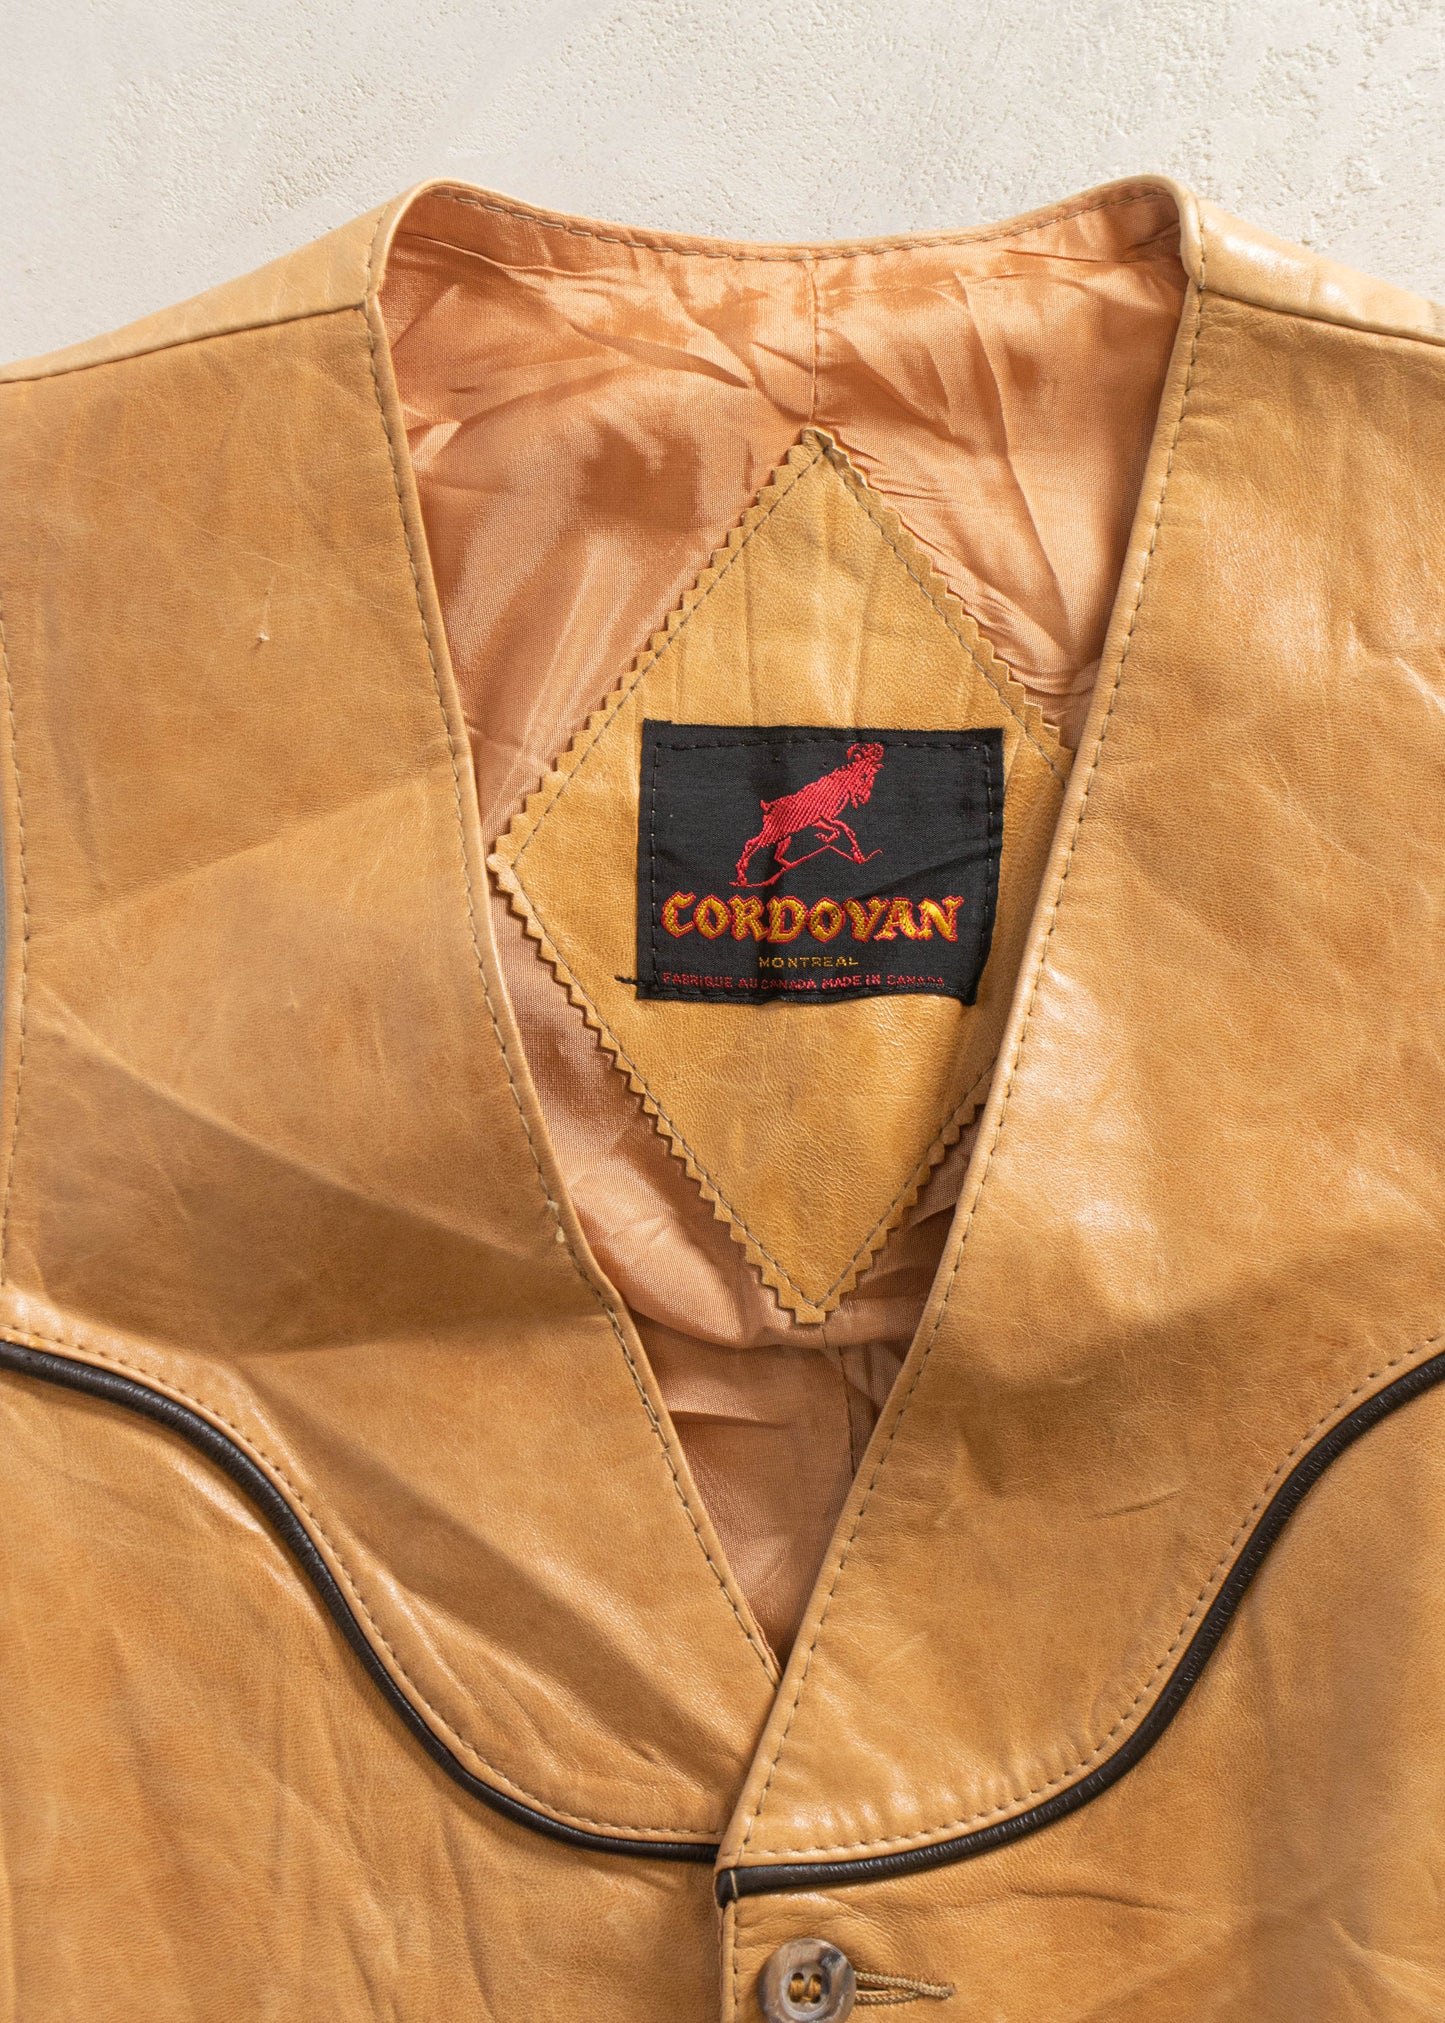 1980s Cordovan Montreal Leather Suit Vest Size S/M